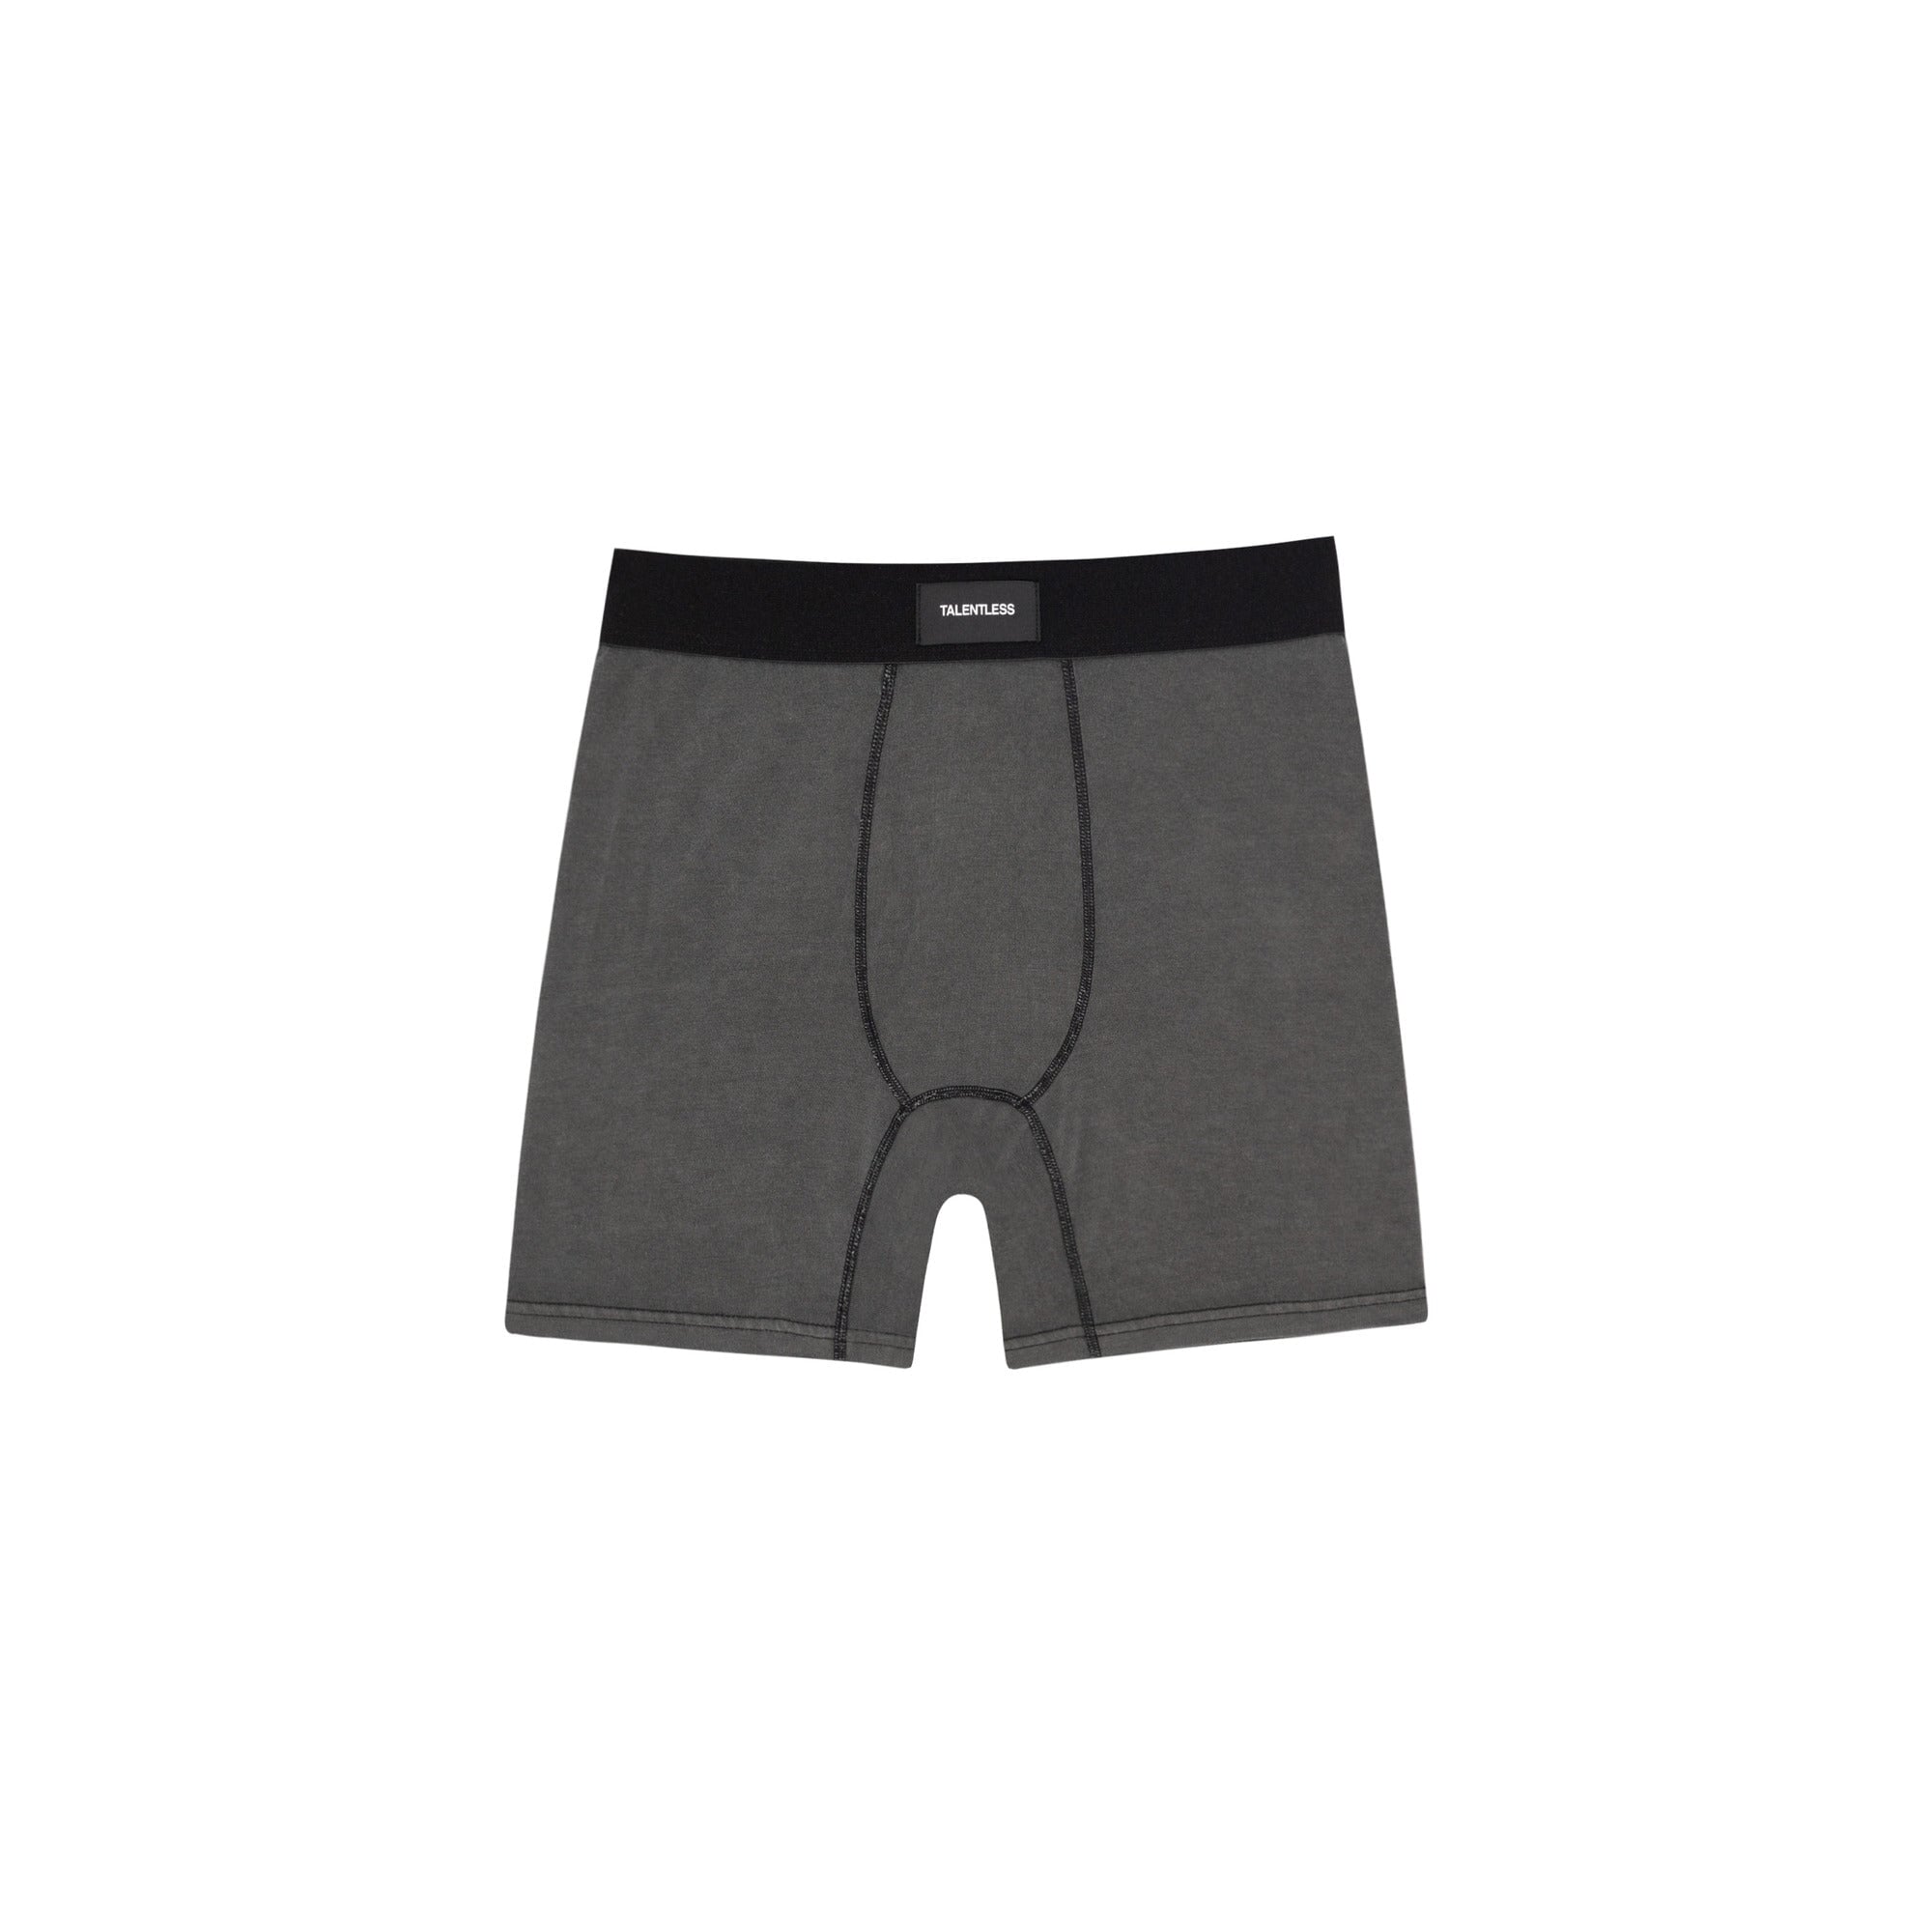 Men's Boxer Brief, Premium underwear